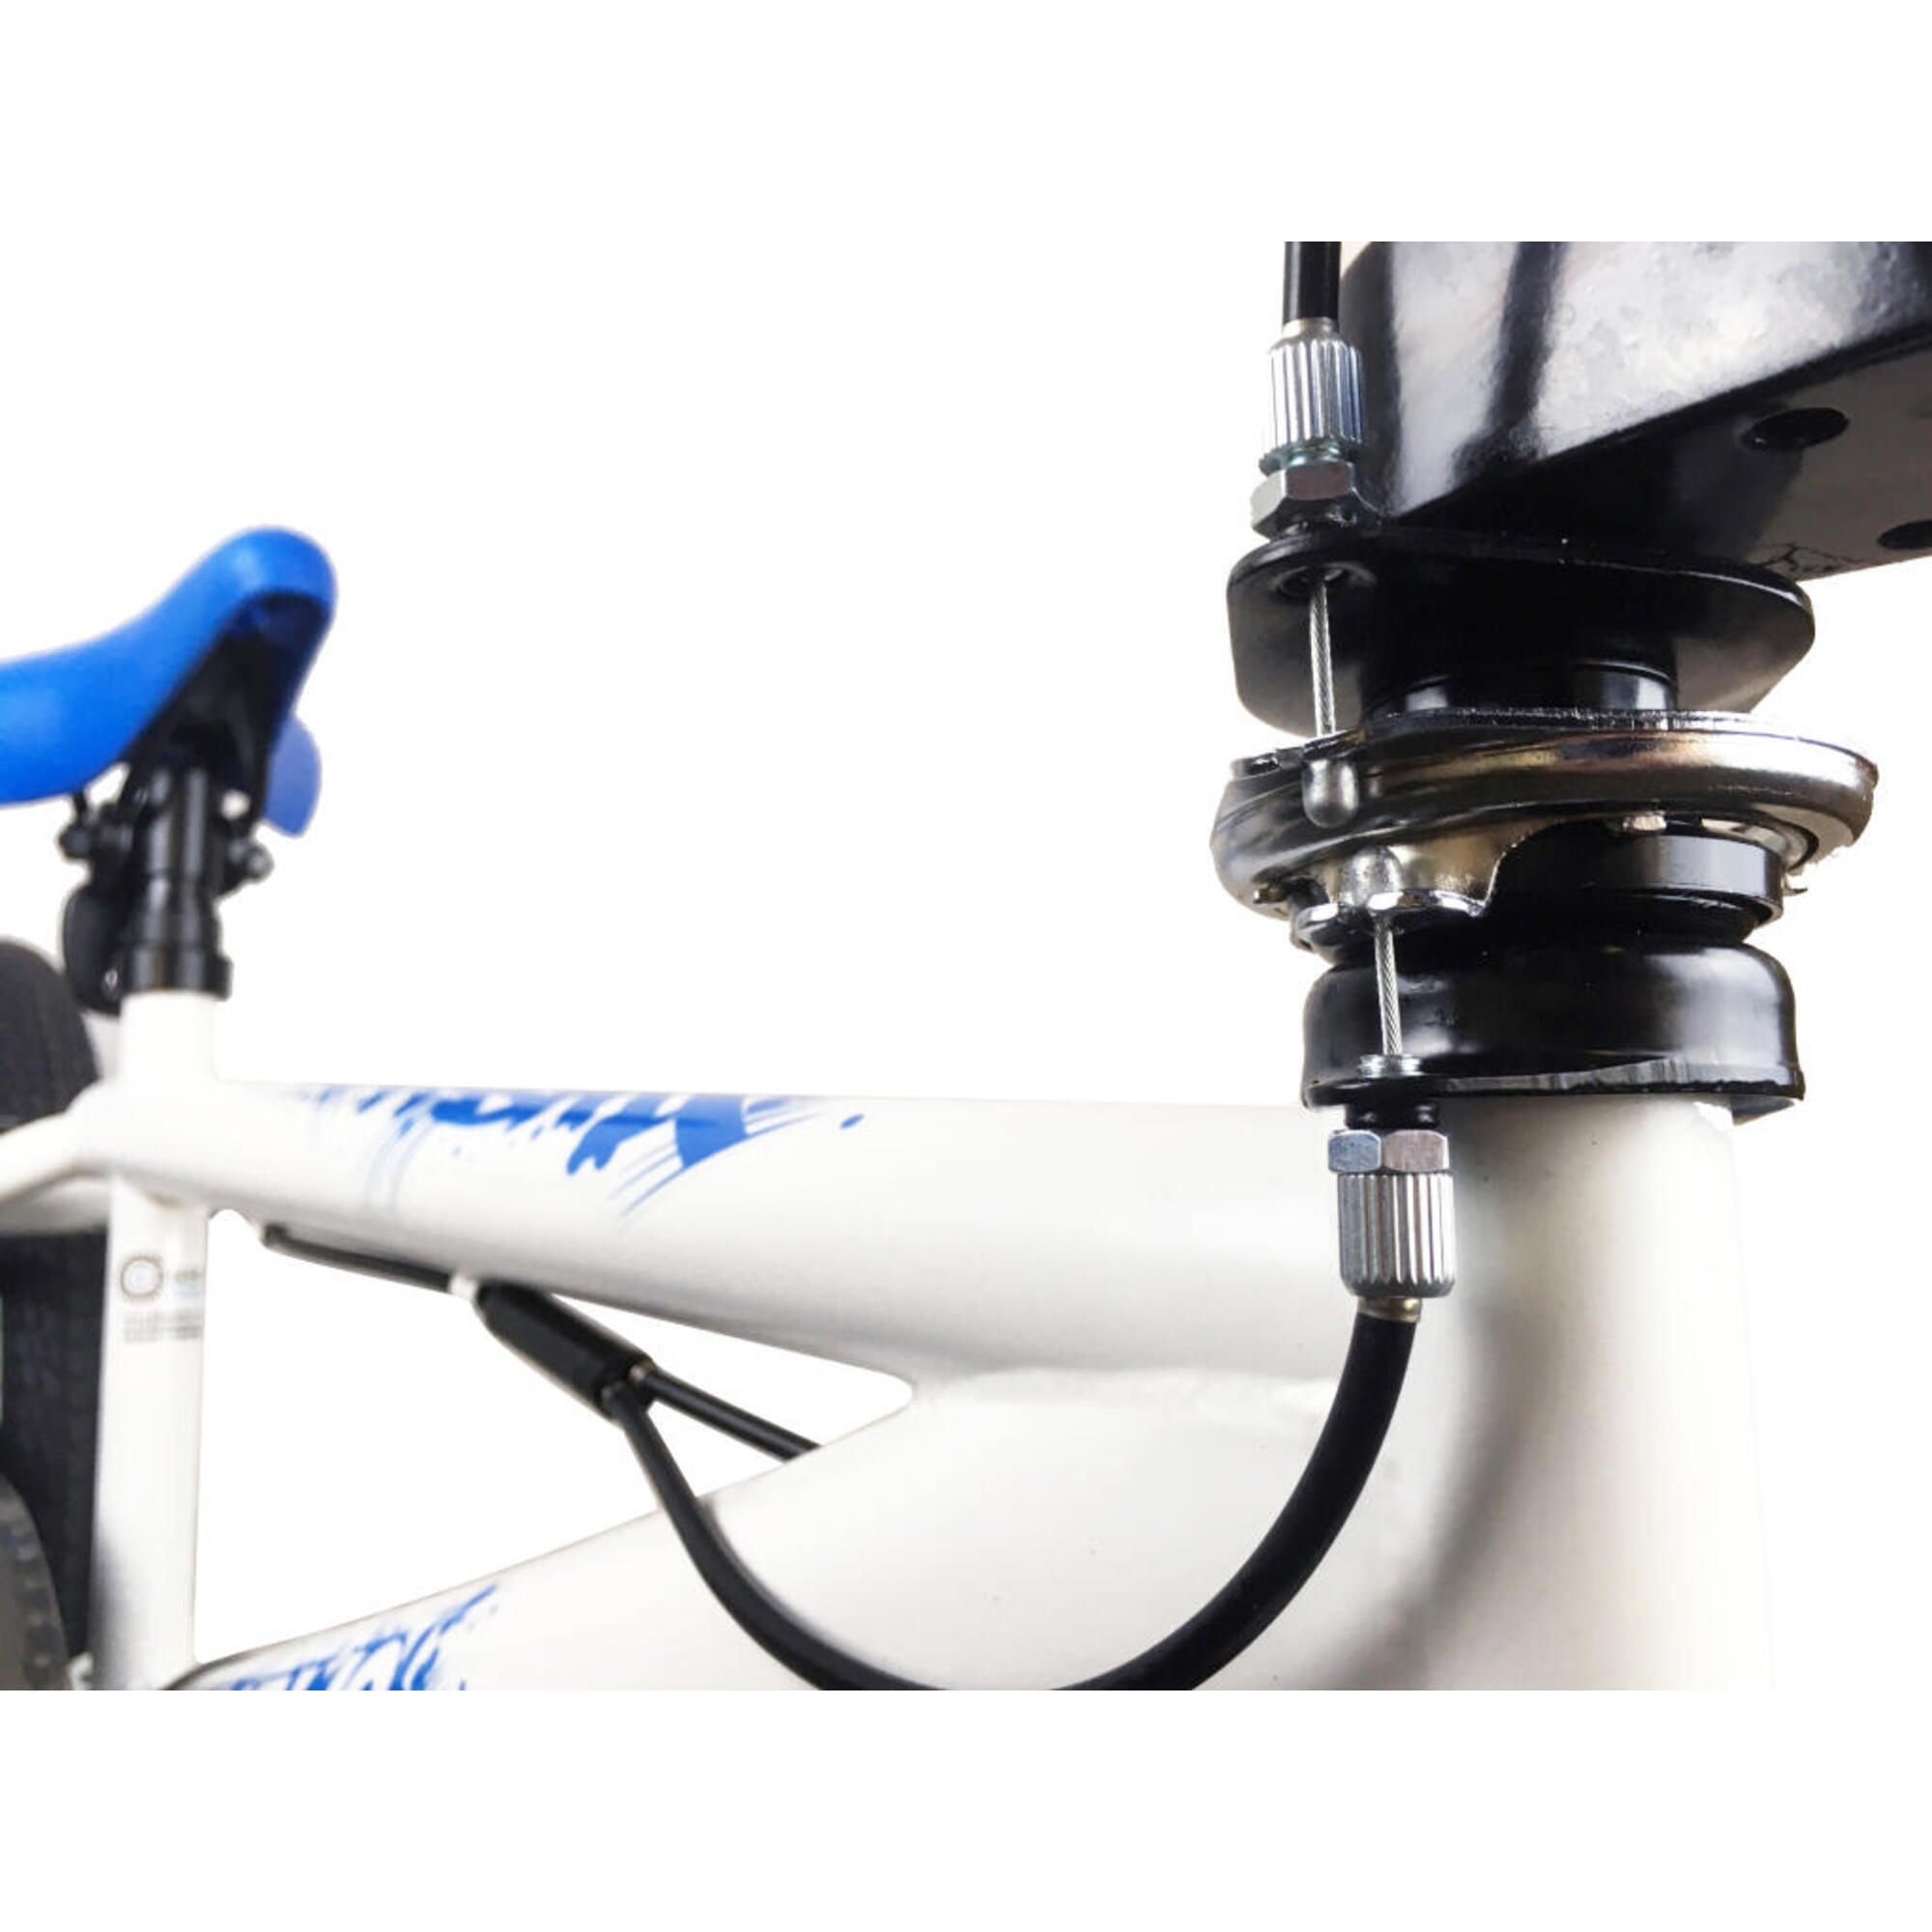 XN-10-20 Freestyle BMX Bike, 20In Wheel - White/Blue 4/5